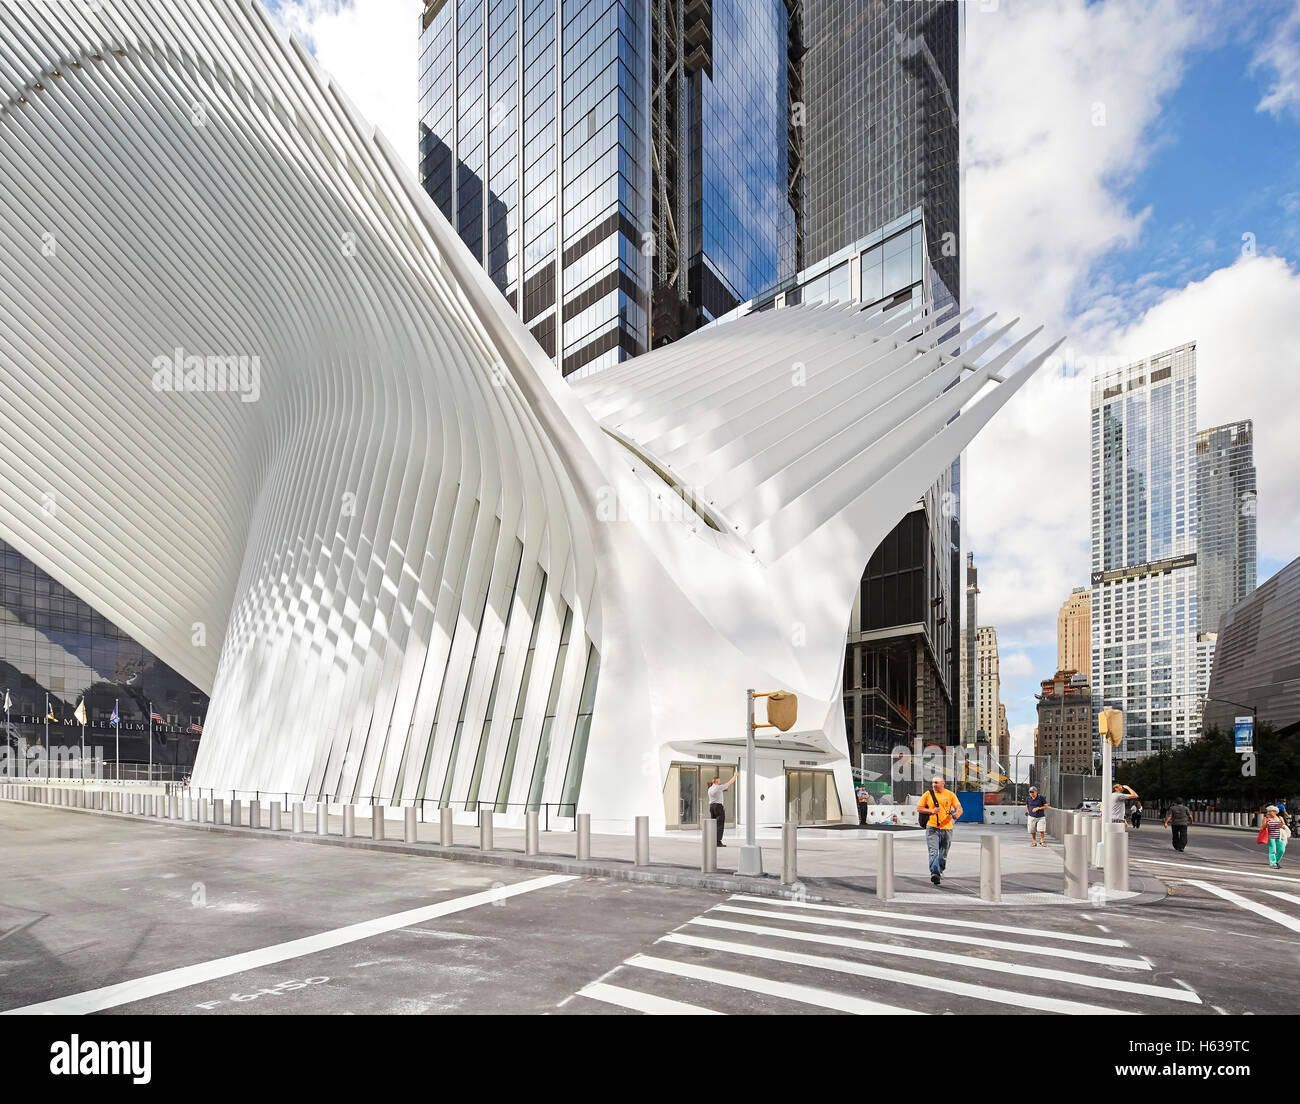 Approach towards Oculus street entrance. The Oculus, World Trade Center  Transportation Hub, New York, United States. Architect Stock Photo - Alamy